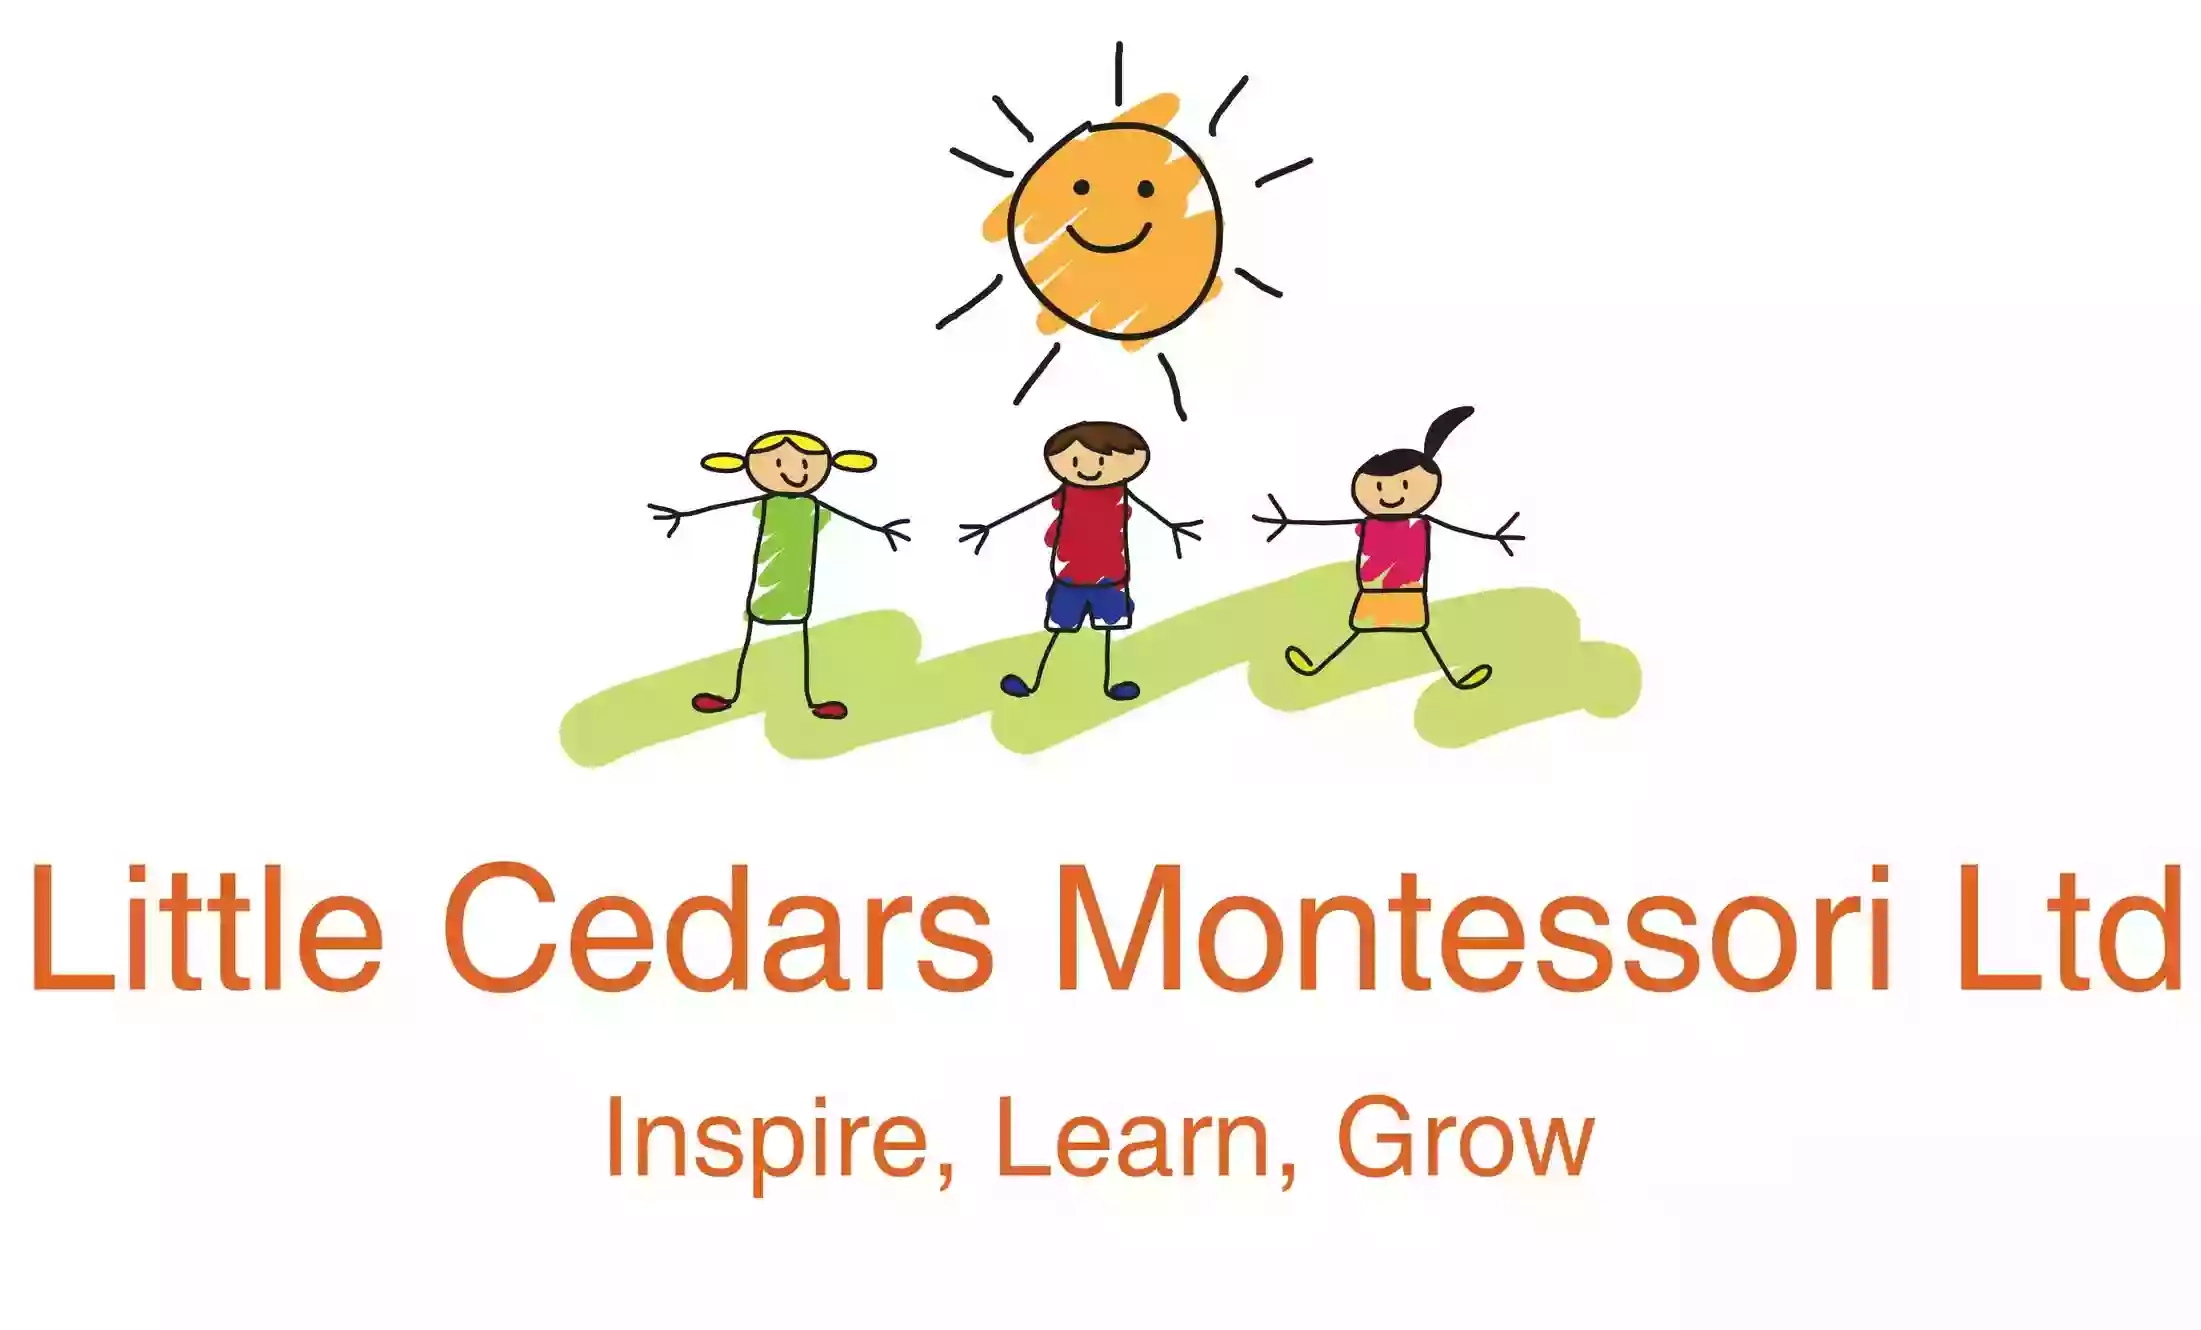 Little Cedars Montessori Ltd